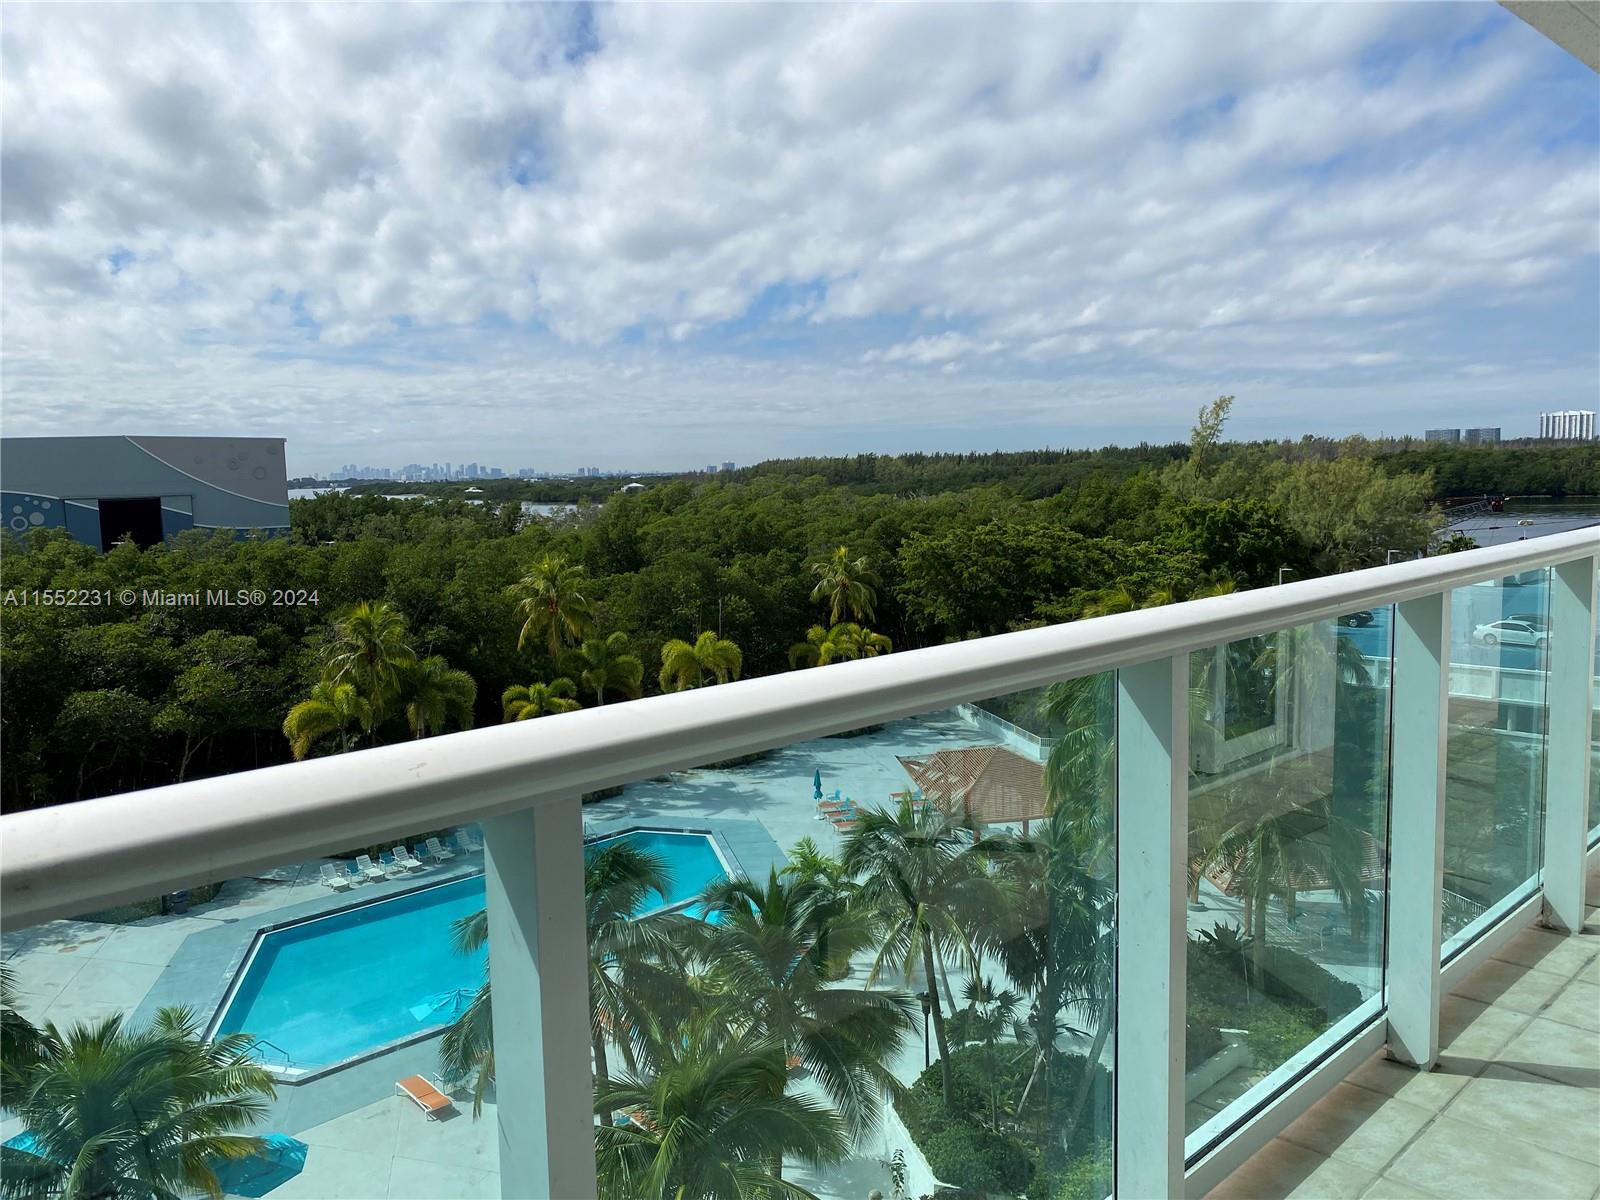 Rental Property at 100 Bayview Dr 622, Sunny Isles Beach, Miami-Dade County, Florida - Bedrooms: 2 
Bathrooms: 2  - $2,980 MO.